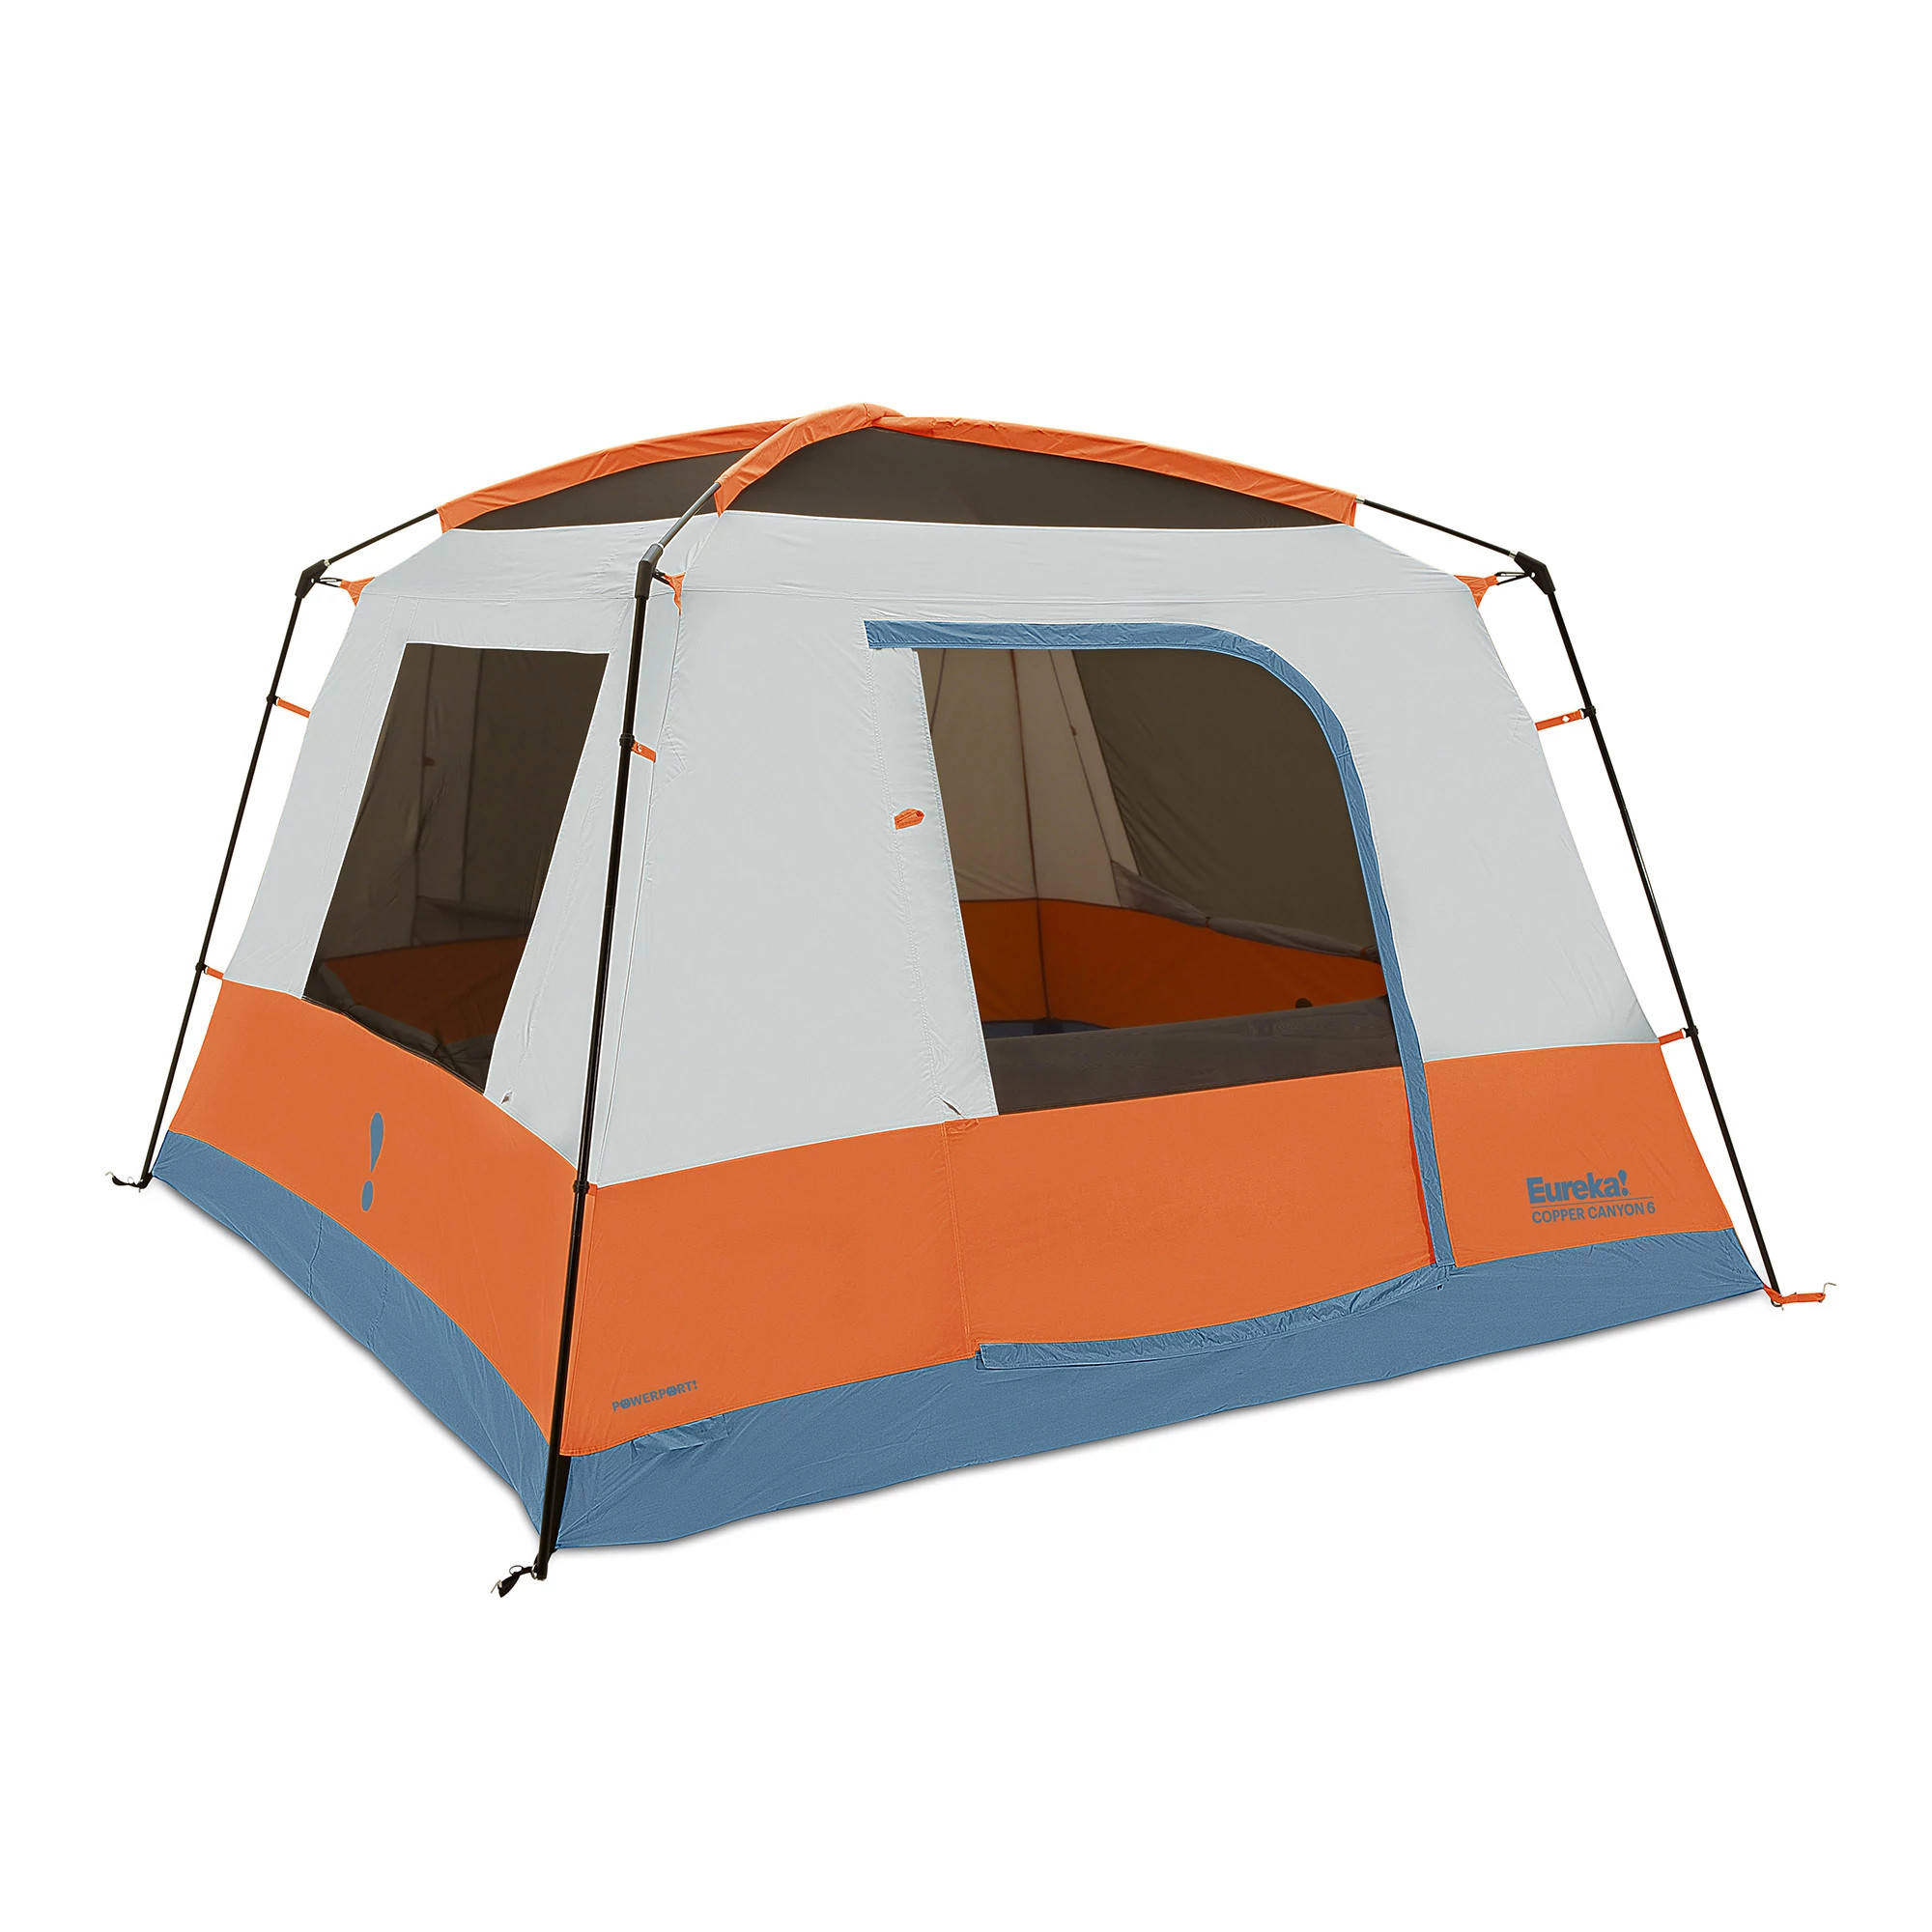 Camping Equipment & Supplies | Eureka!